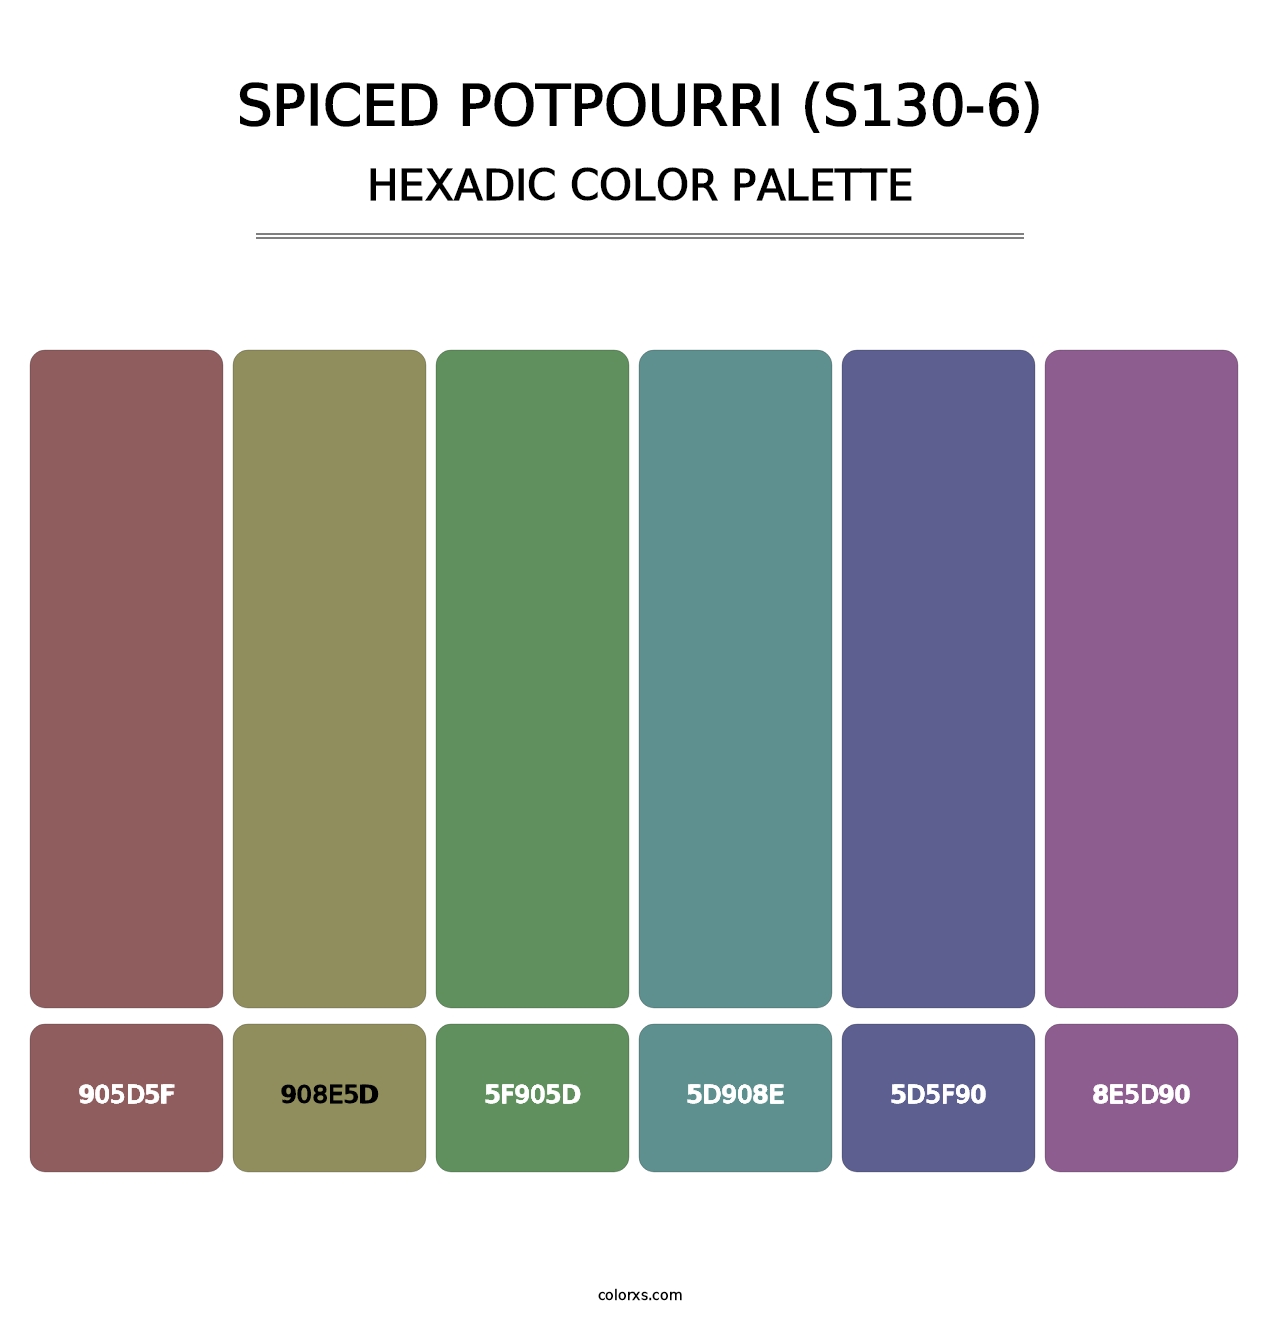 Spiced Potpourri (S130-6) - Hexadic Color Palette